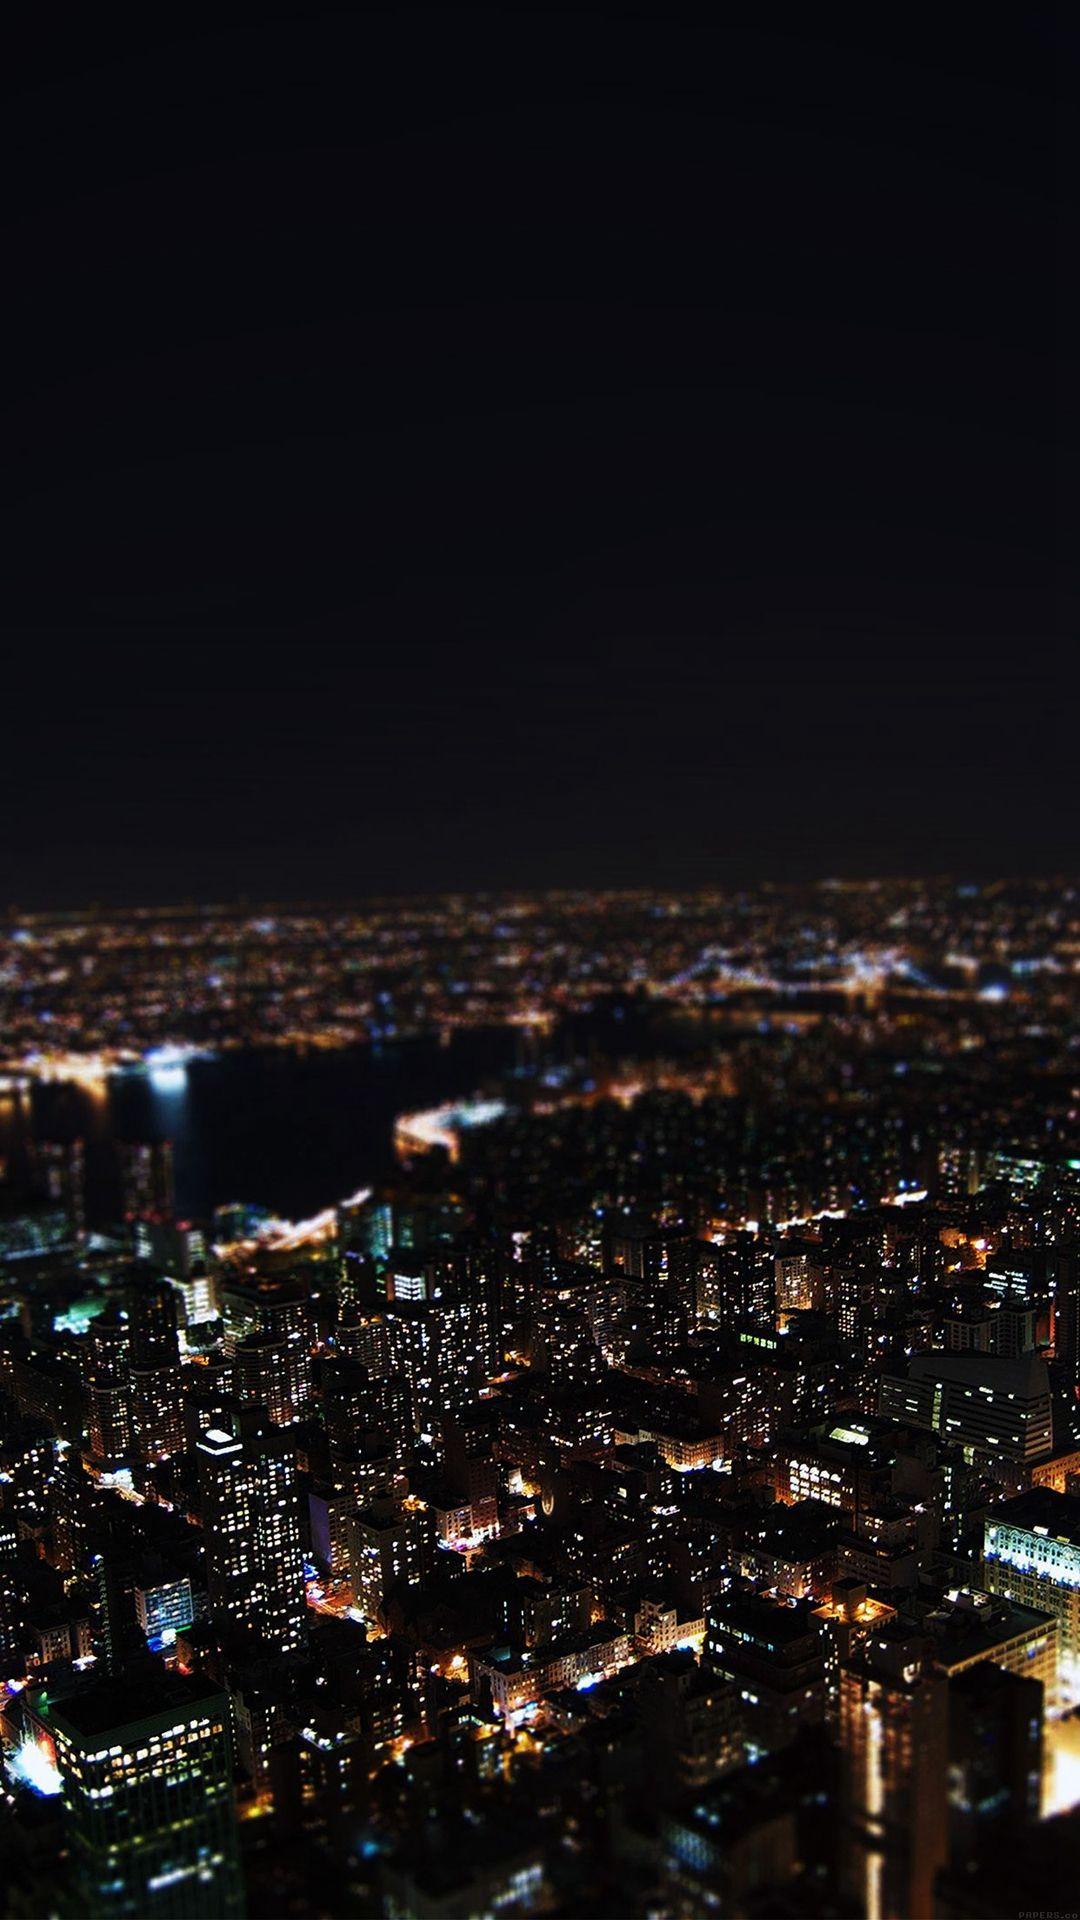 Dark Night City Building Skyview iPhone 6 wallpaper. City lights wallpaper, City wallpaper, Night landscape